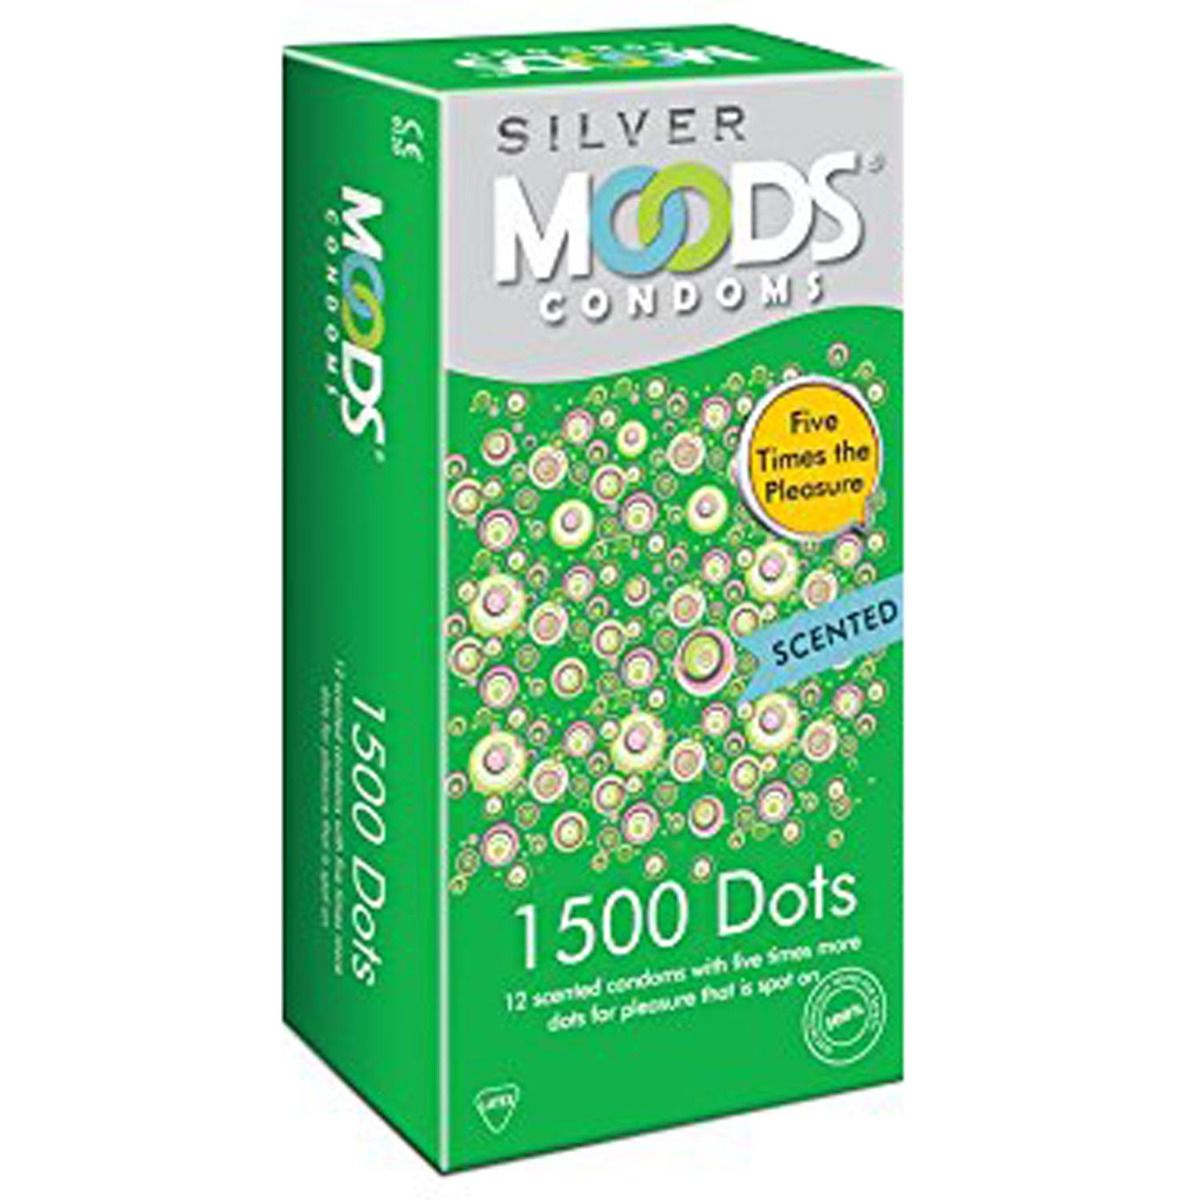 Buy Moods Silver 1500 Dots Condoms, 12 Count Online